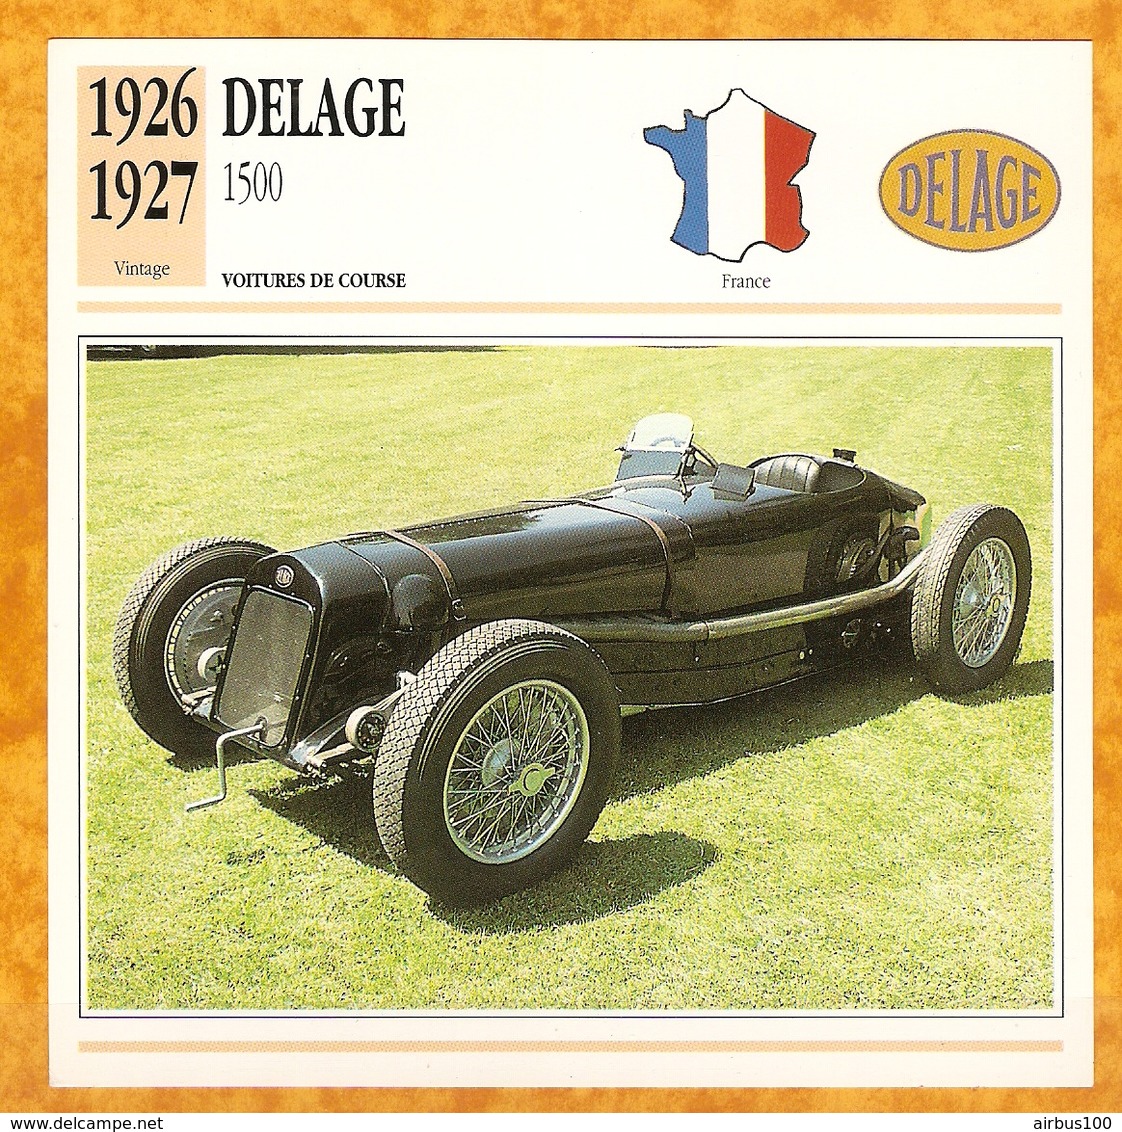 1926 FRANCE VIEILLE VOITURE DELAGE 1500 - FRANCE OLD CAR - FRANCIA VIEJO COCHE - VECCHIA MACCHINA - Autos